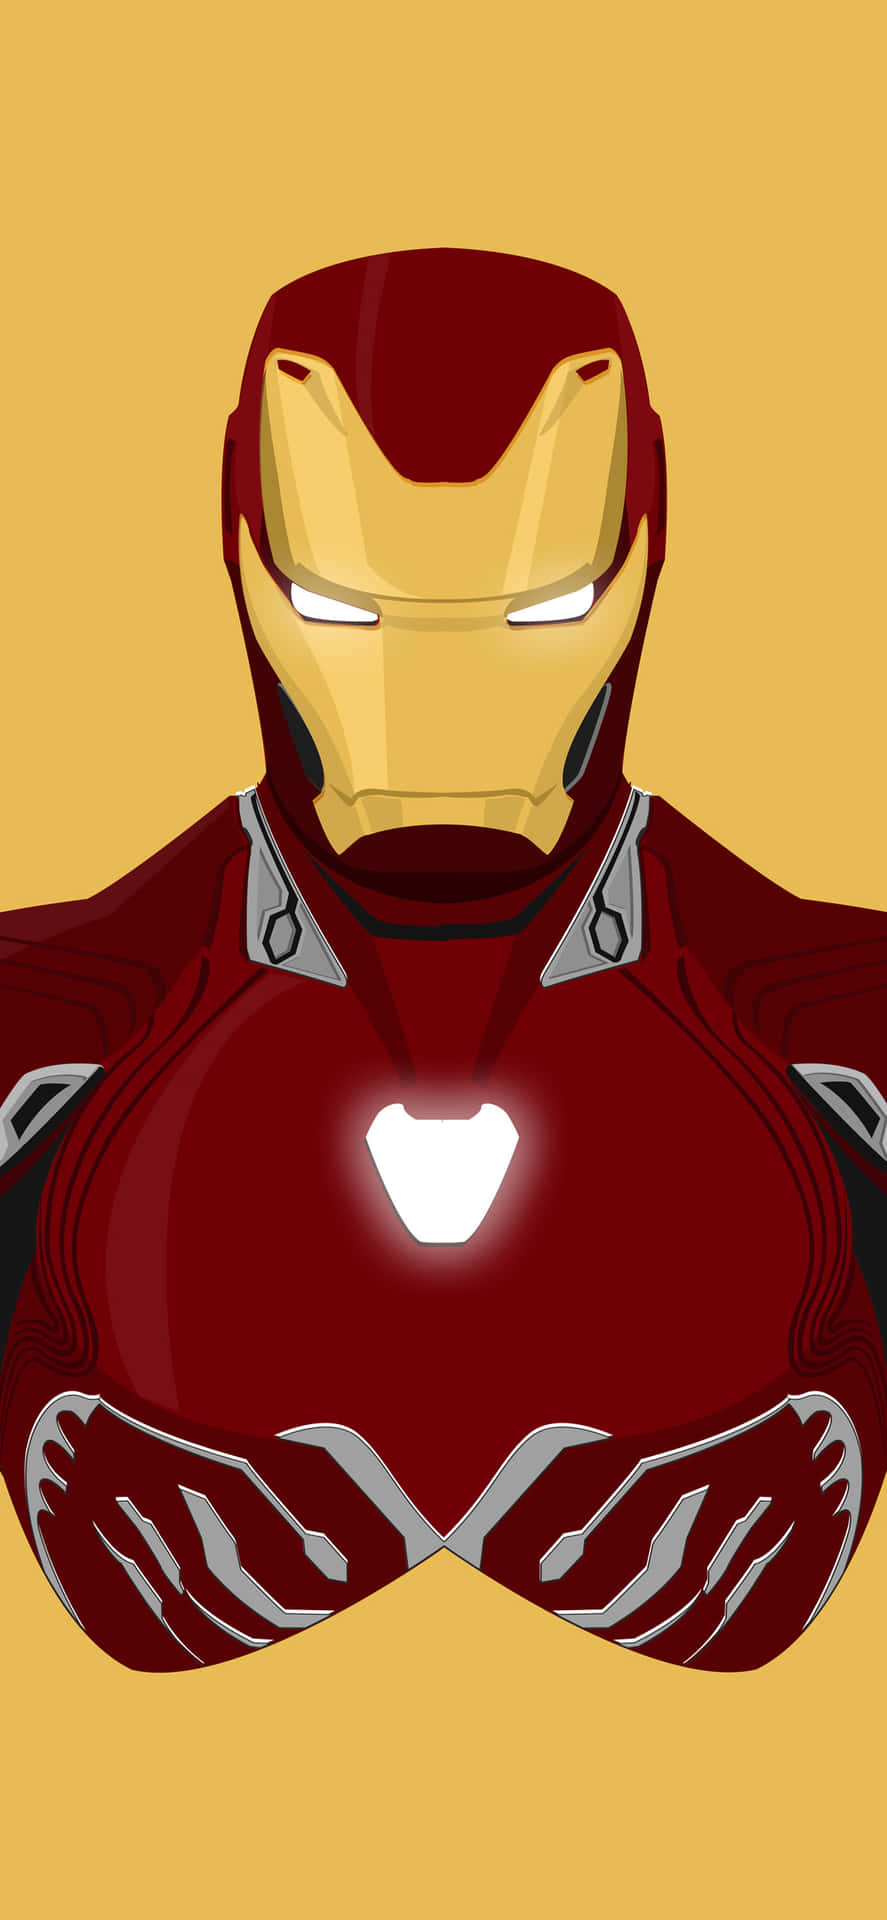 Aesthetic Cool Iron Man iPhone Wallpaper